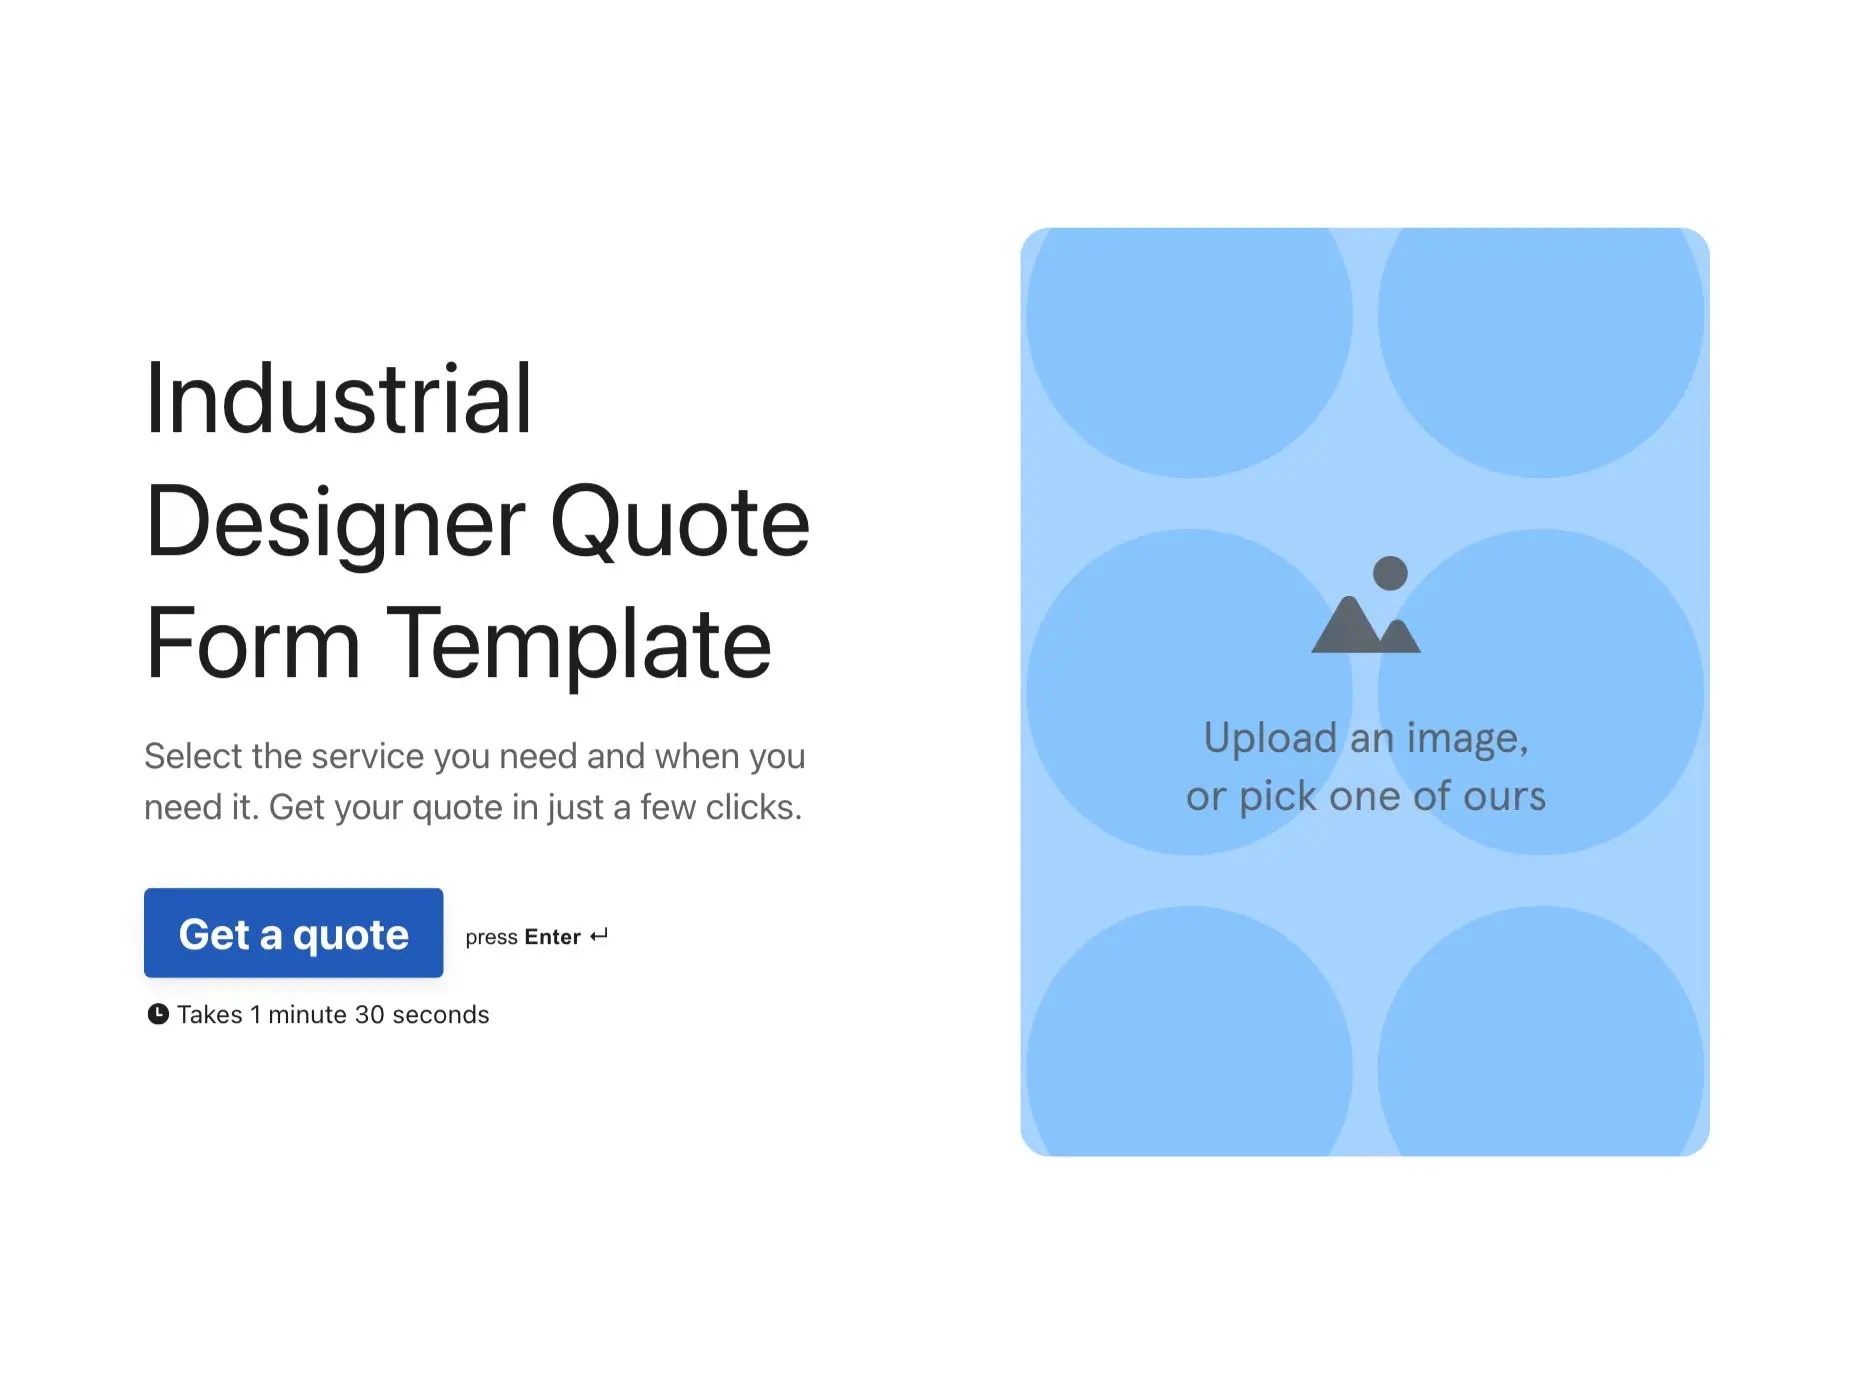 Industrial Designer Quote Form Template Hero